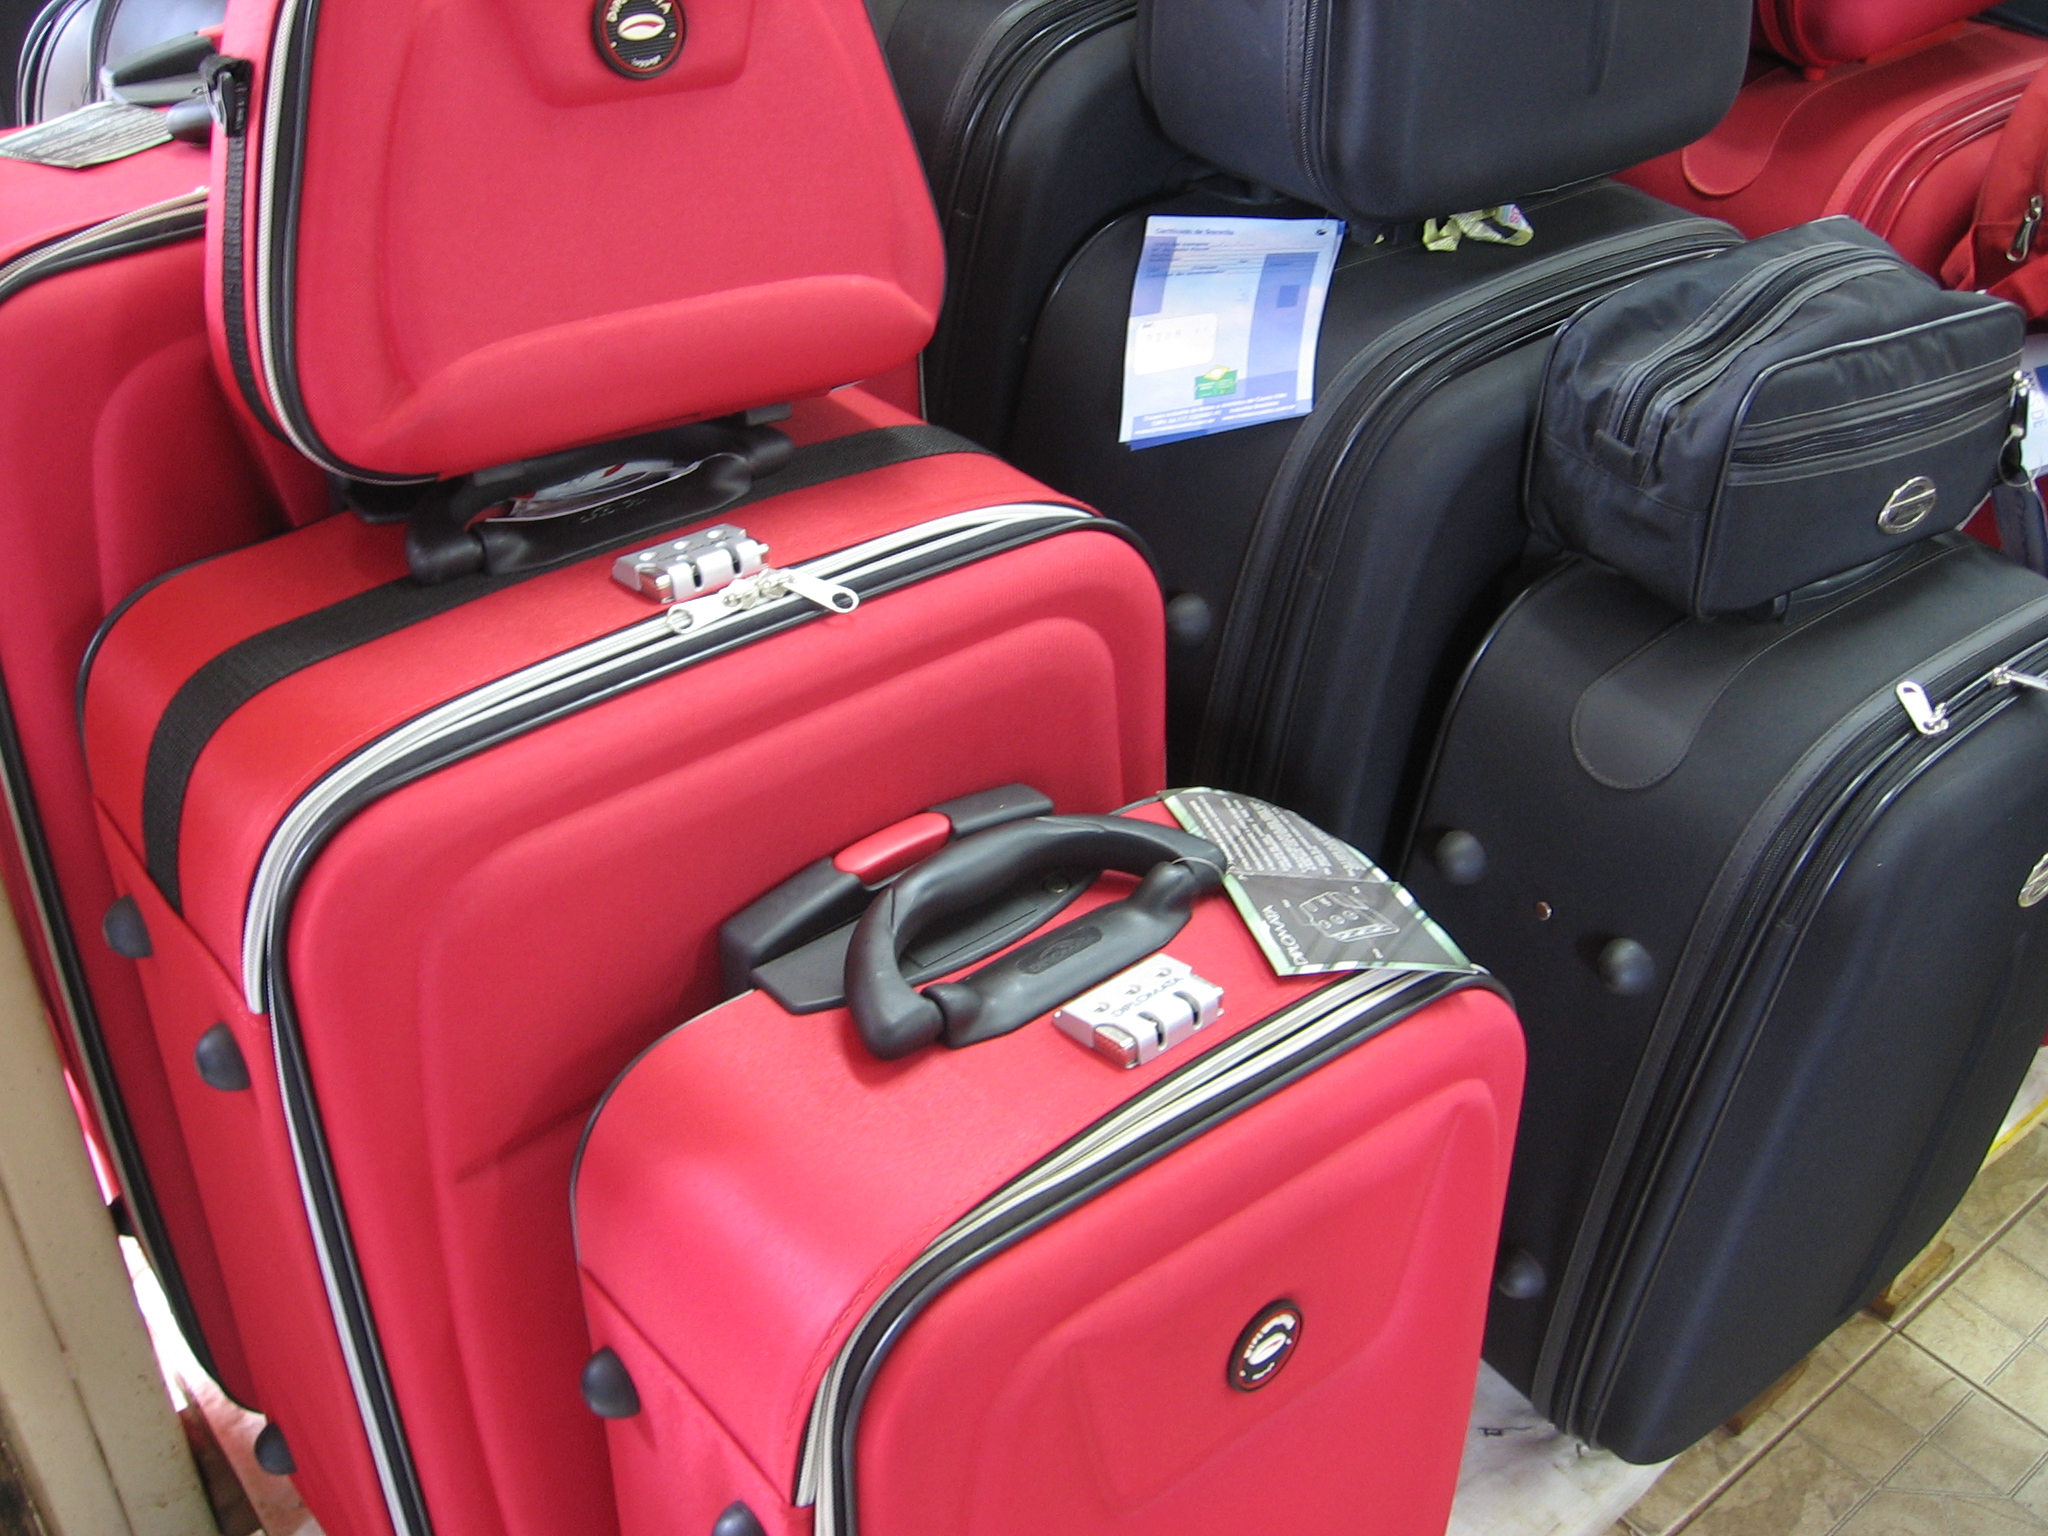 ESPAÃ‘A: Arranca la huelga de facturación de maletas en aeropuertos